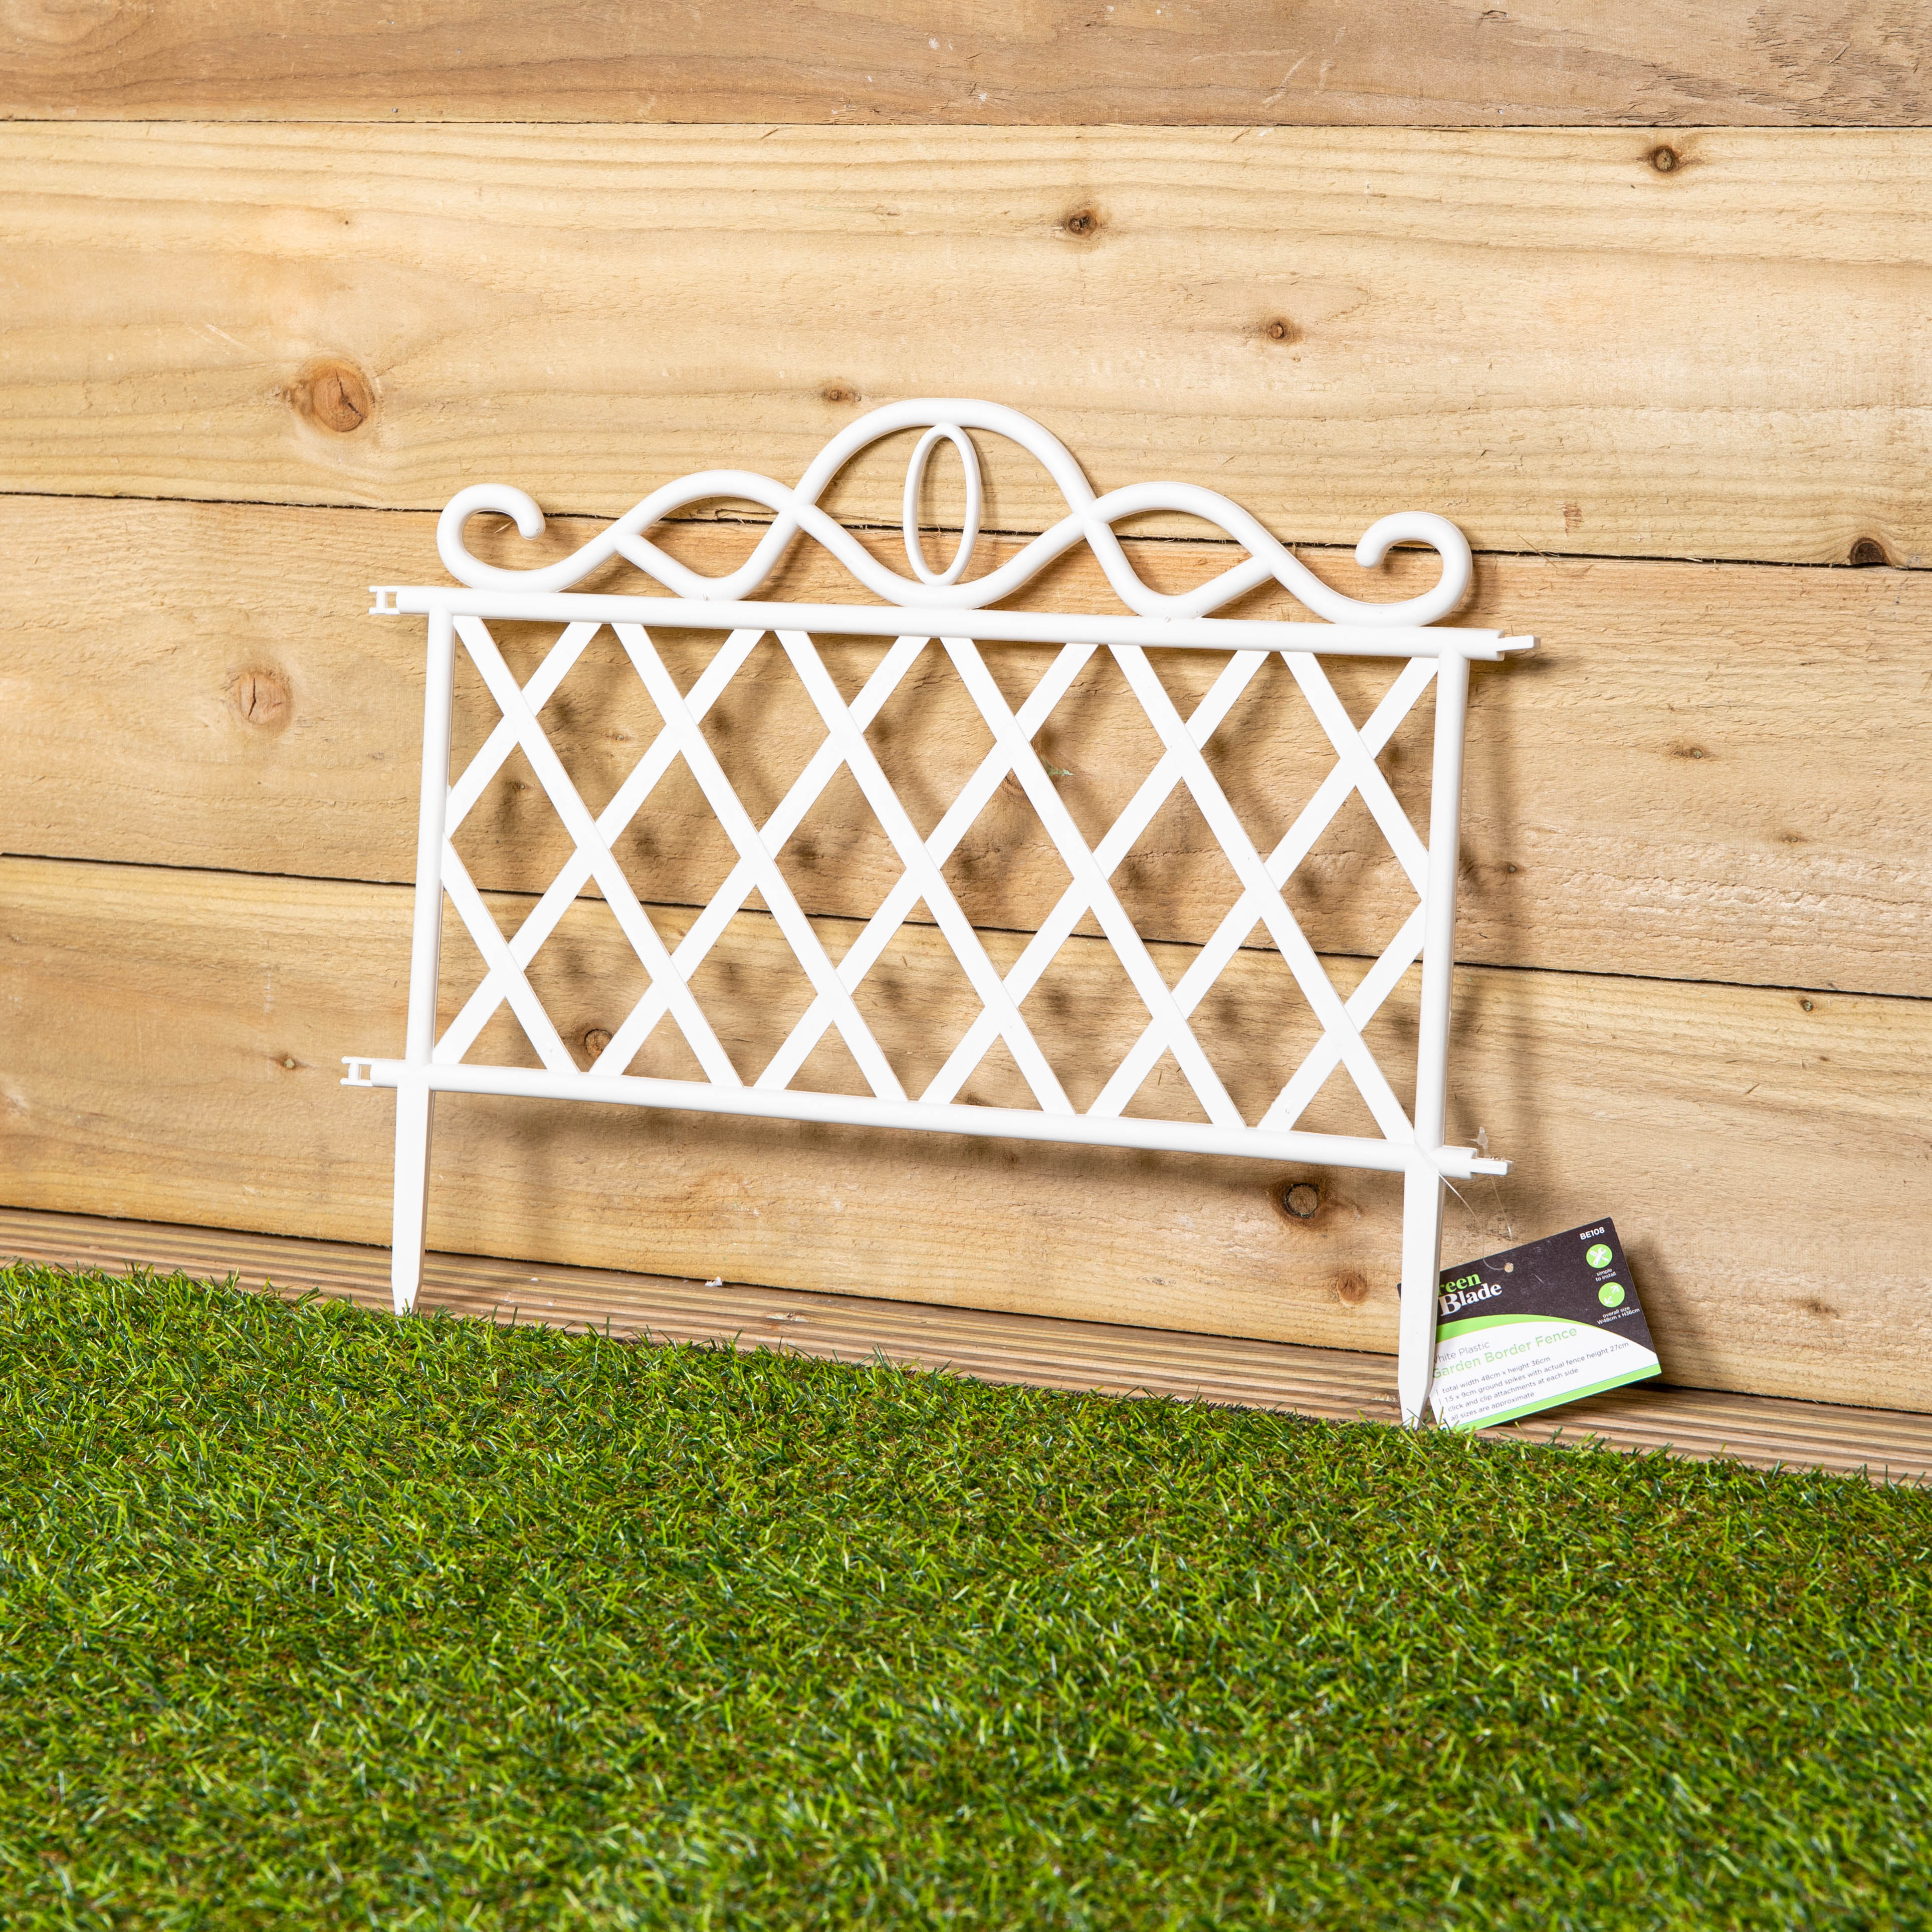 Pack of 6 27cm White Plastic Garden Patio Lawn Border Fence Edging